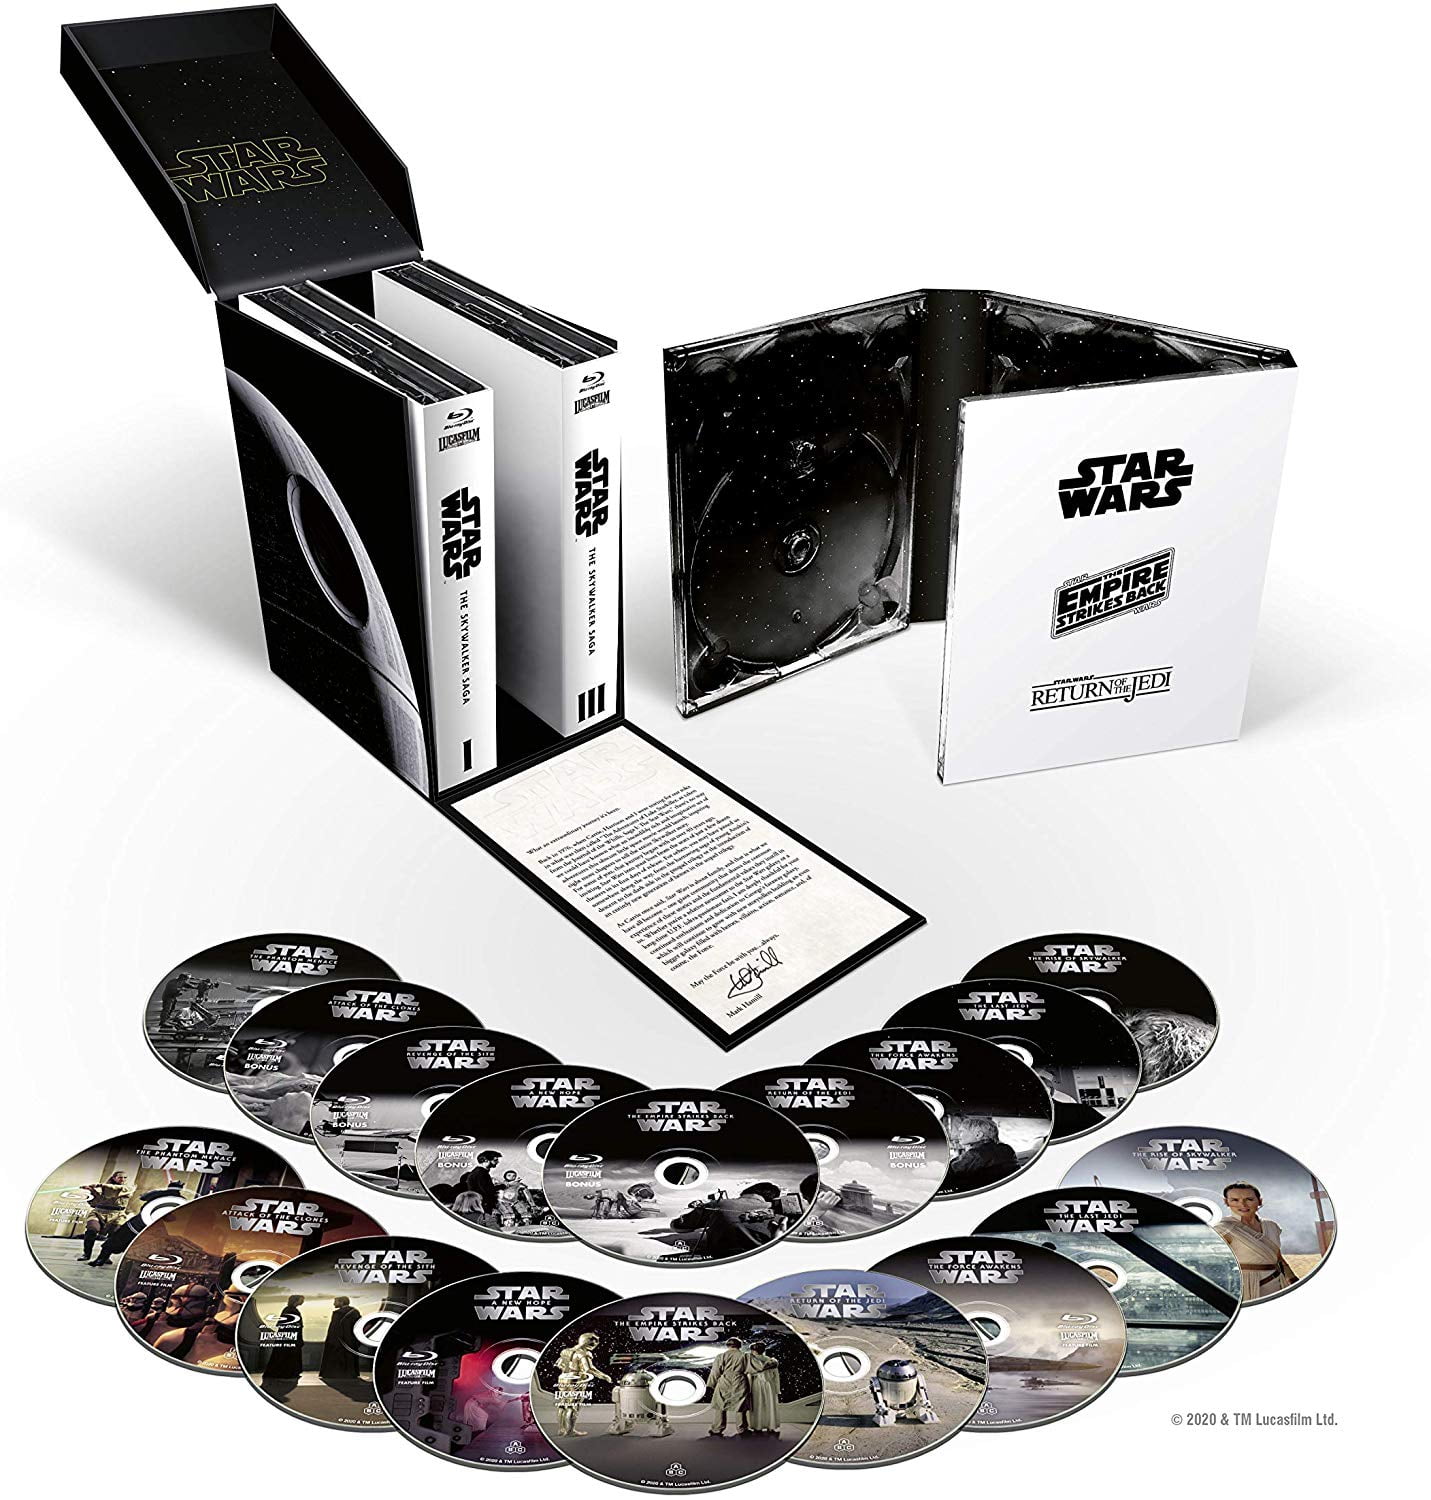 star wars complete saga dvd box set